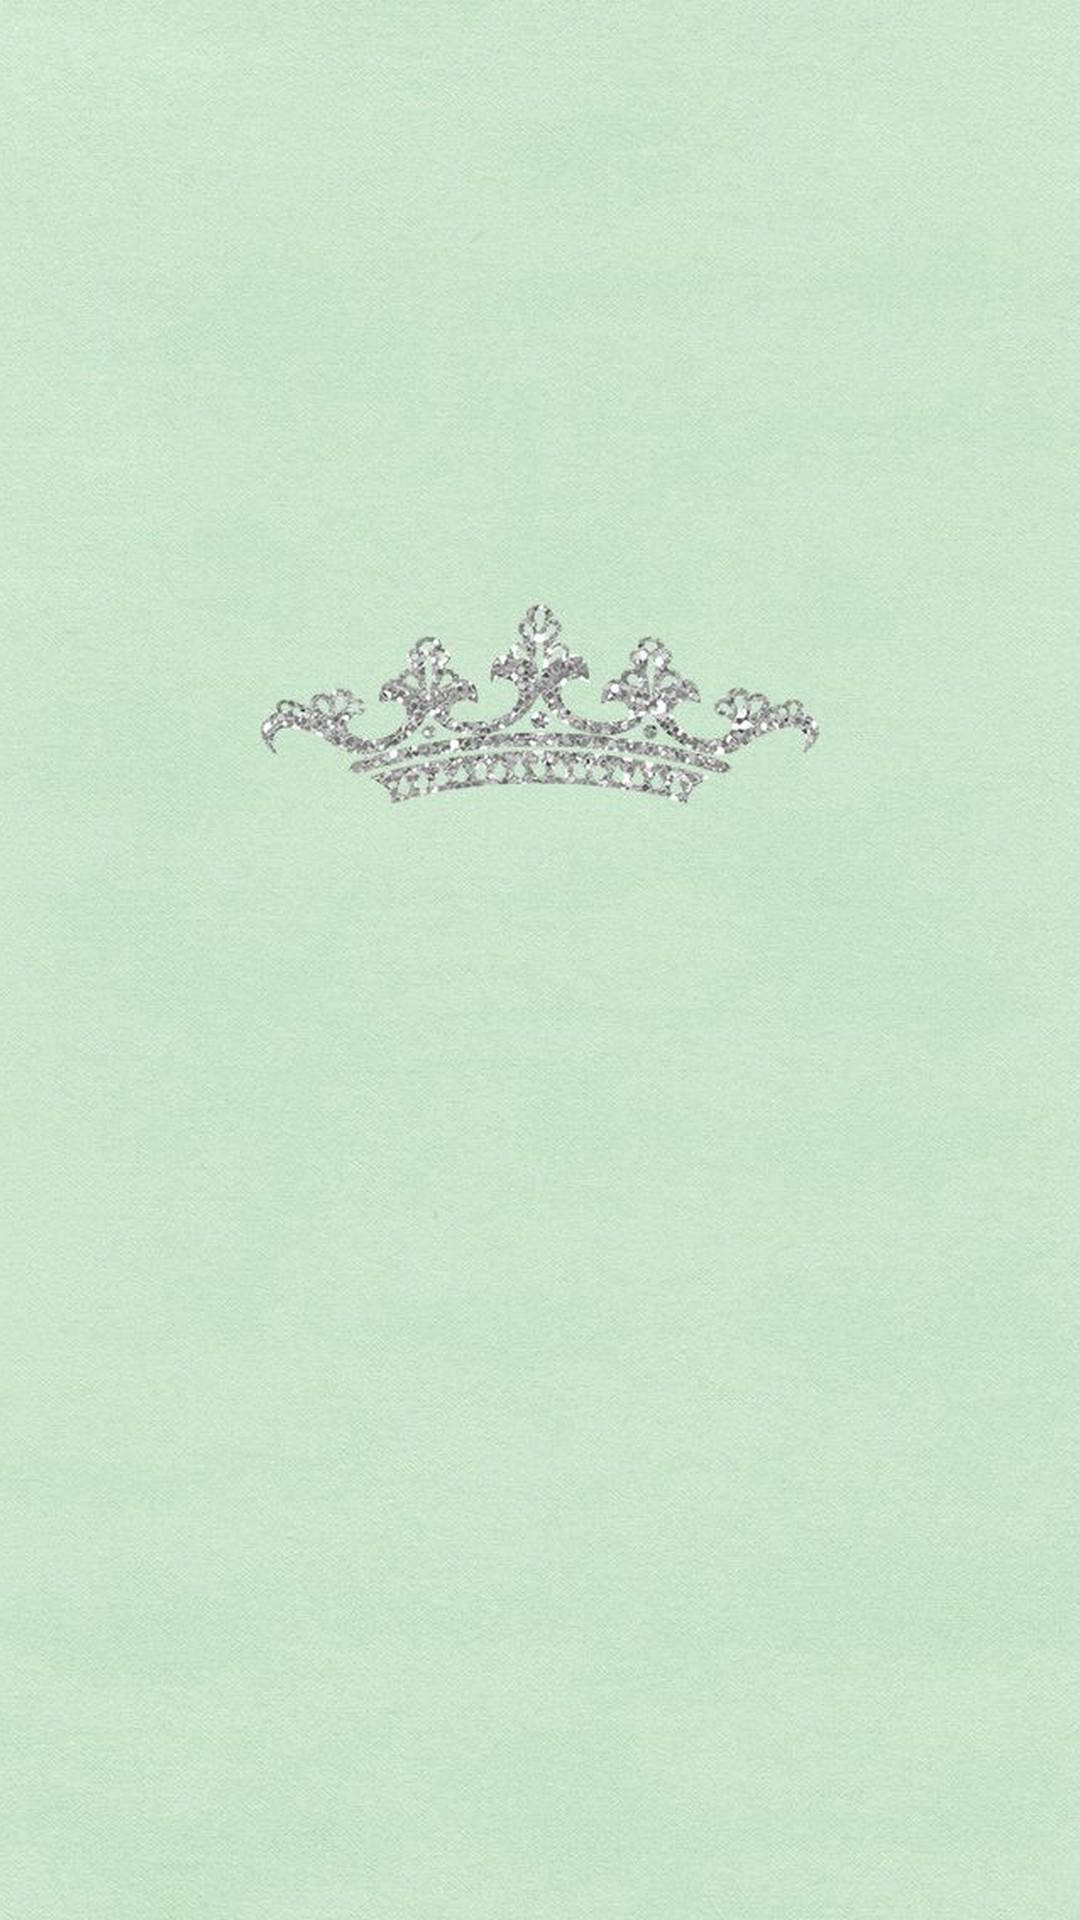 Elegant Royal Crown On Mint Green Backdrop Background